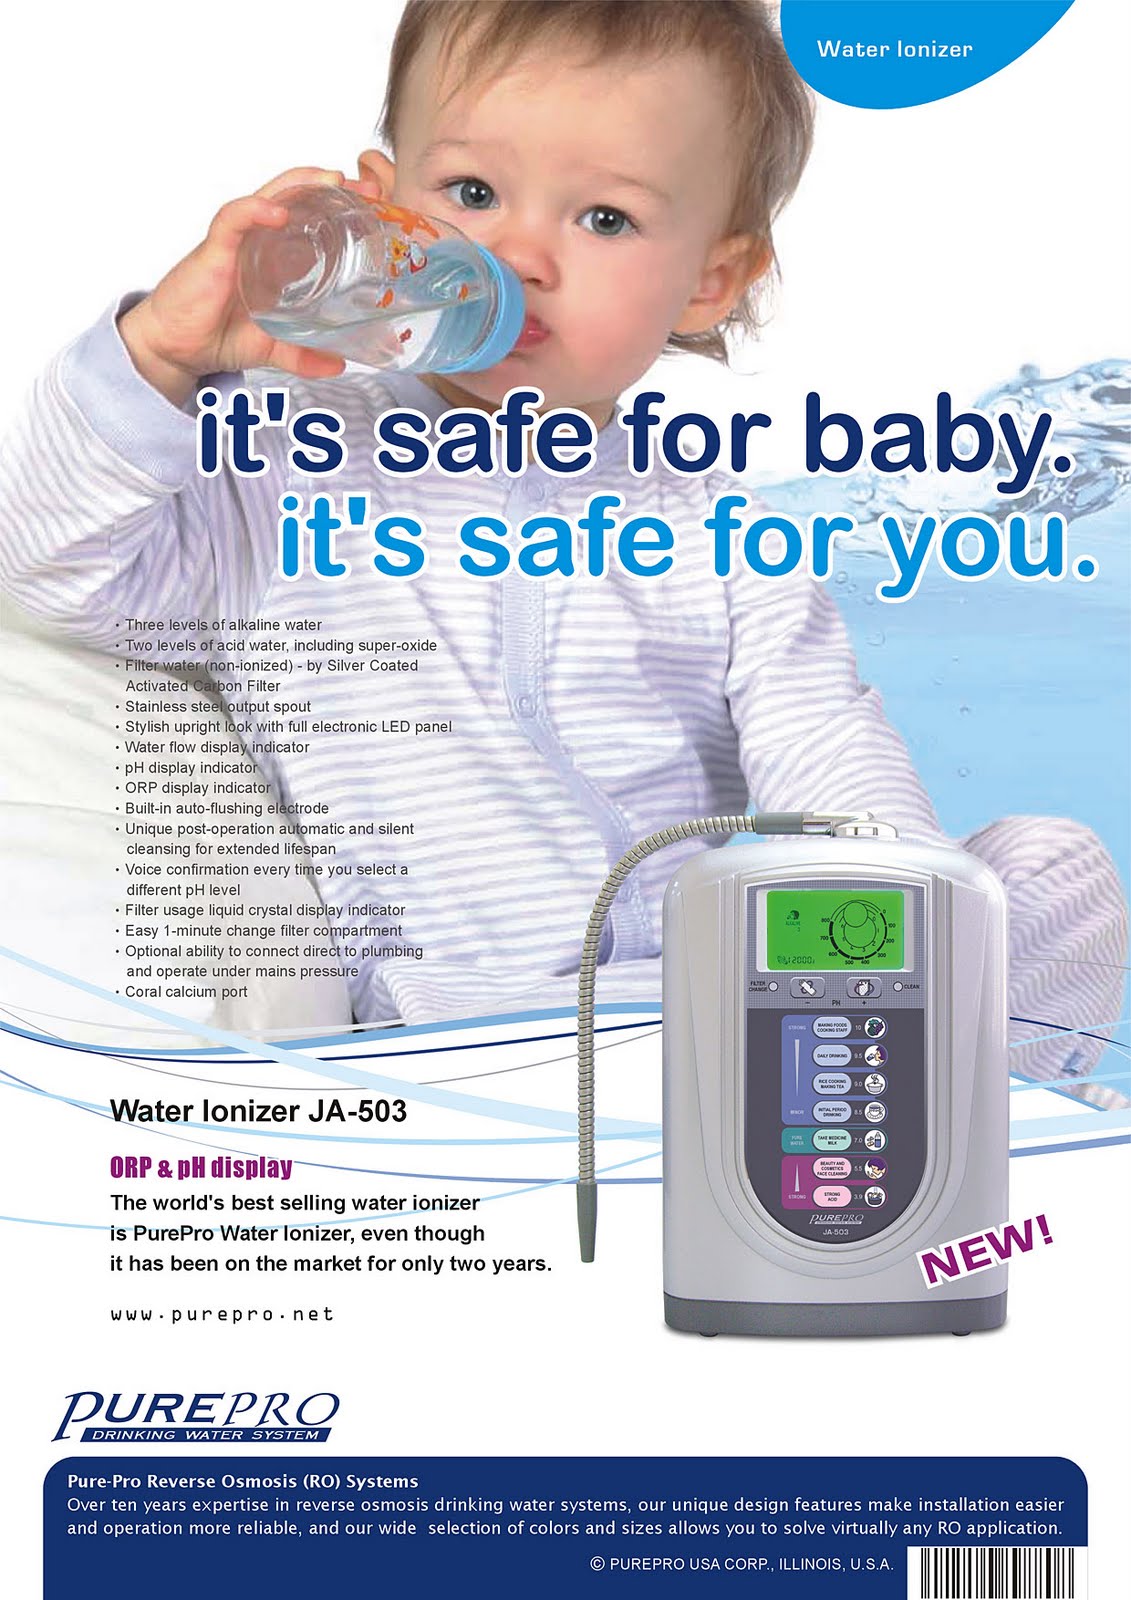 PurePro USA Water Ionizer JA-503